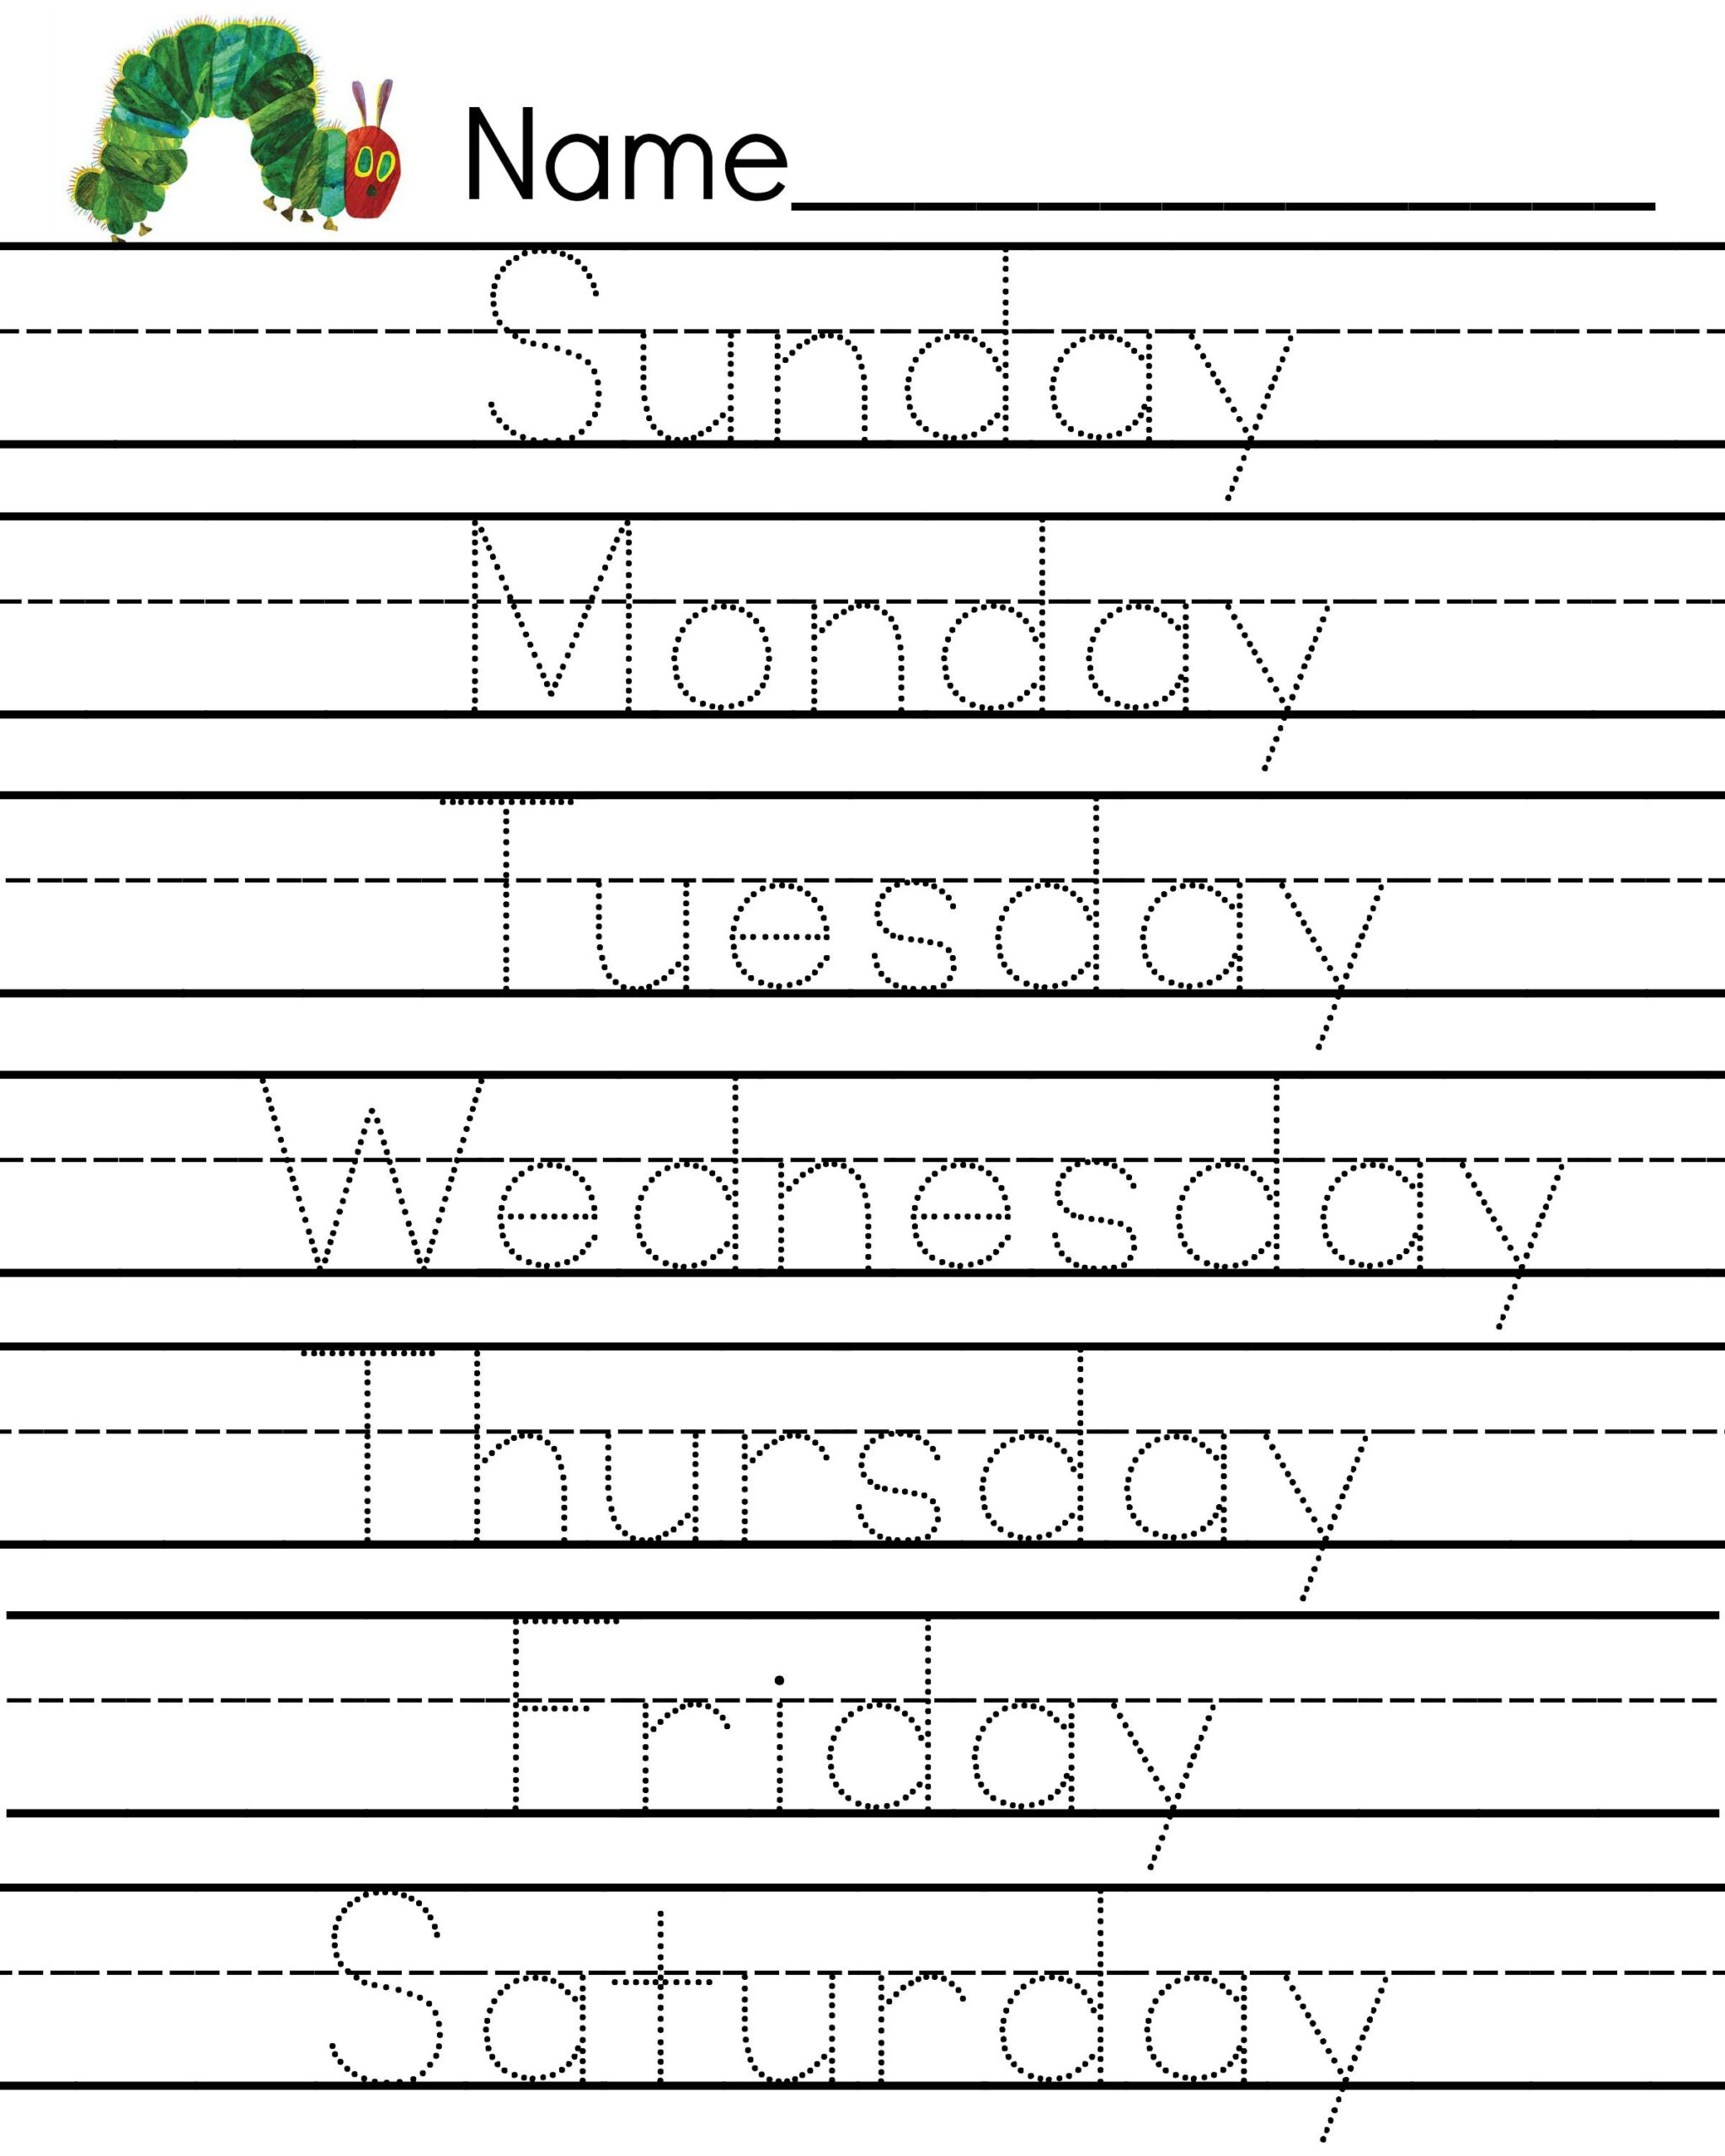 The Very Hungry Caterpillar Days Of The Week Writing Sheet Preschool 